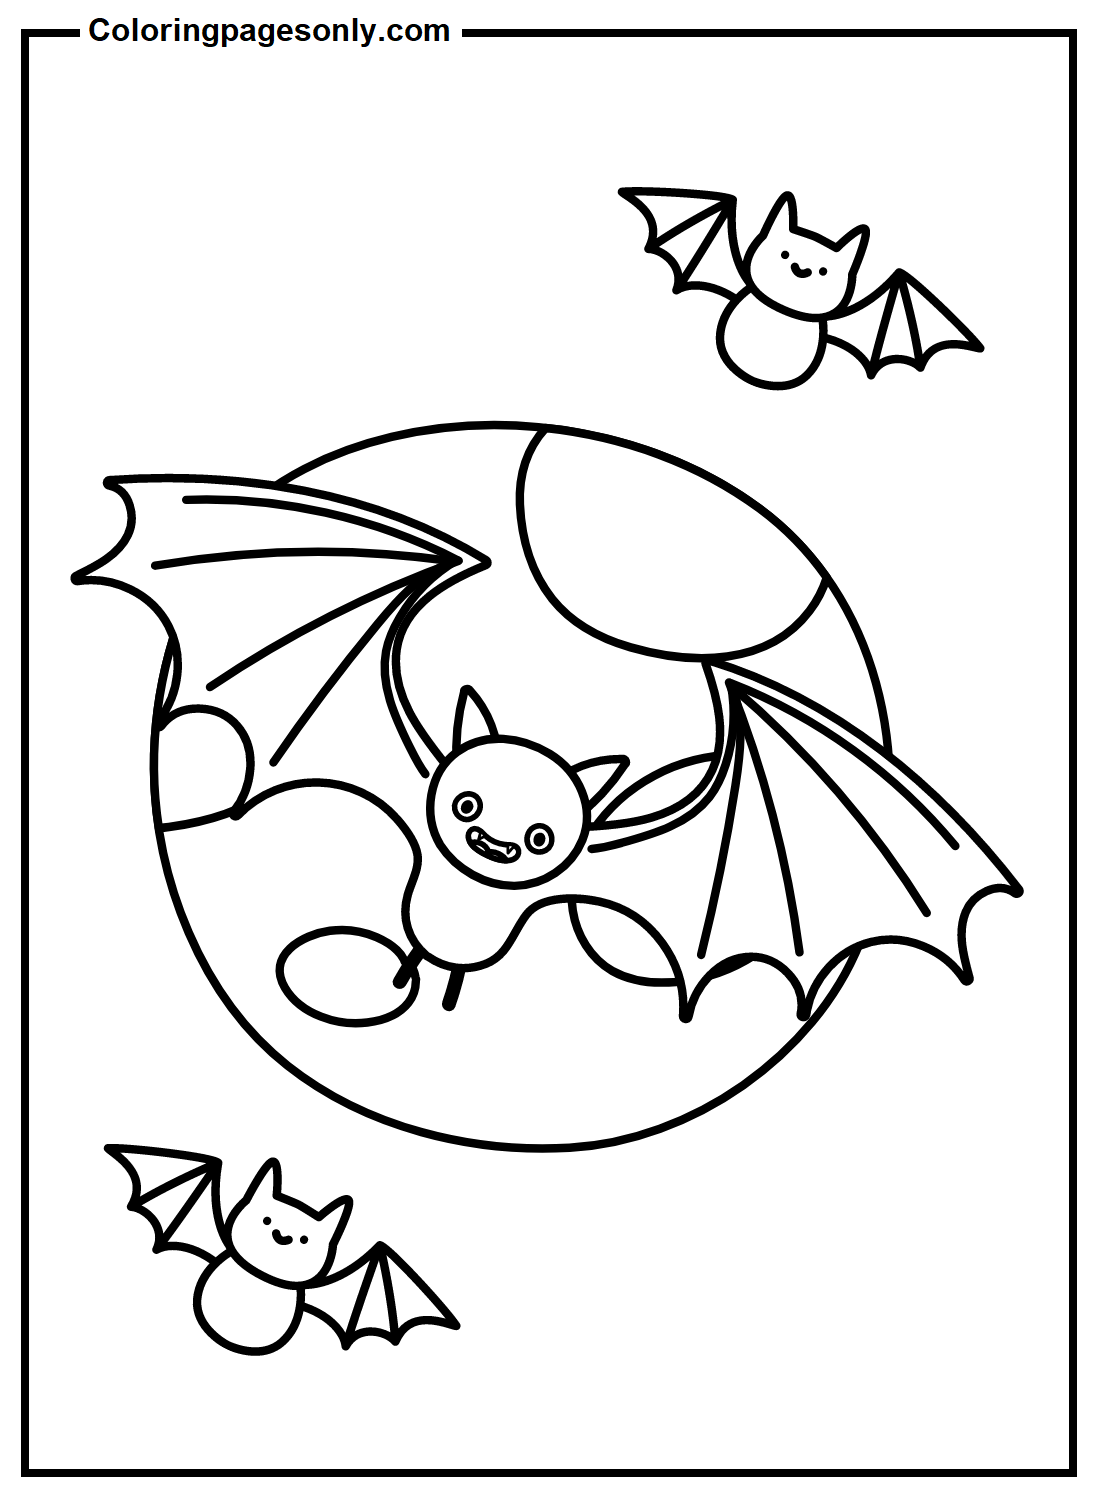 Morcegos voadores from Morcego